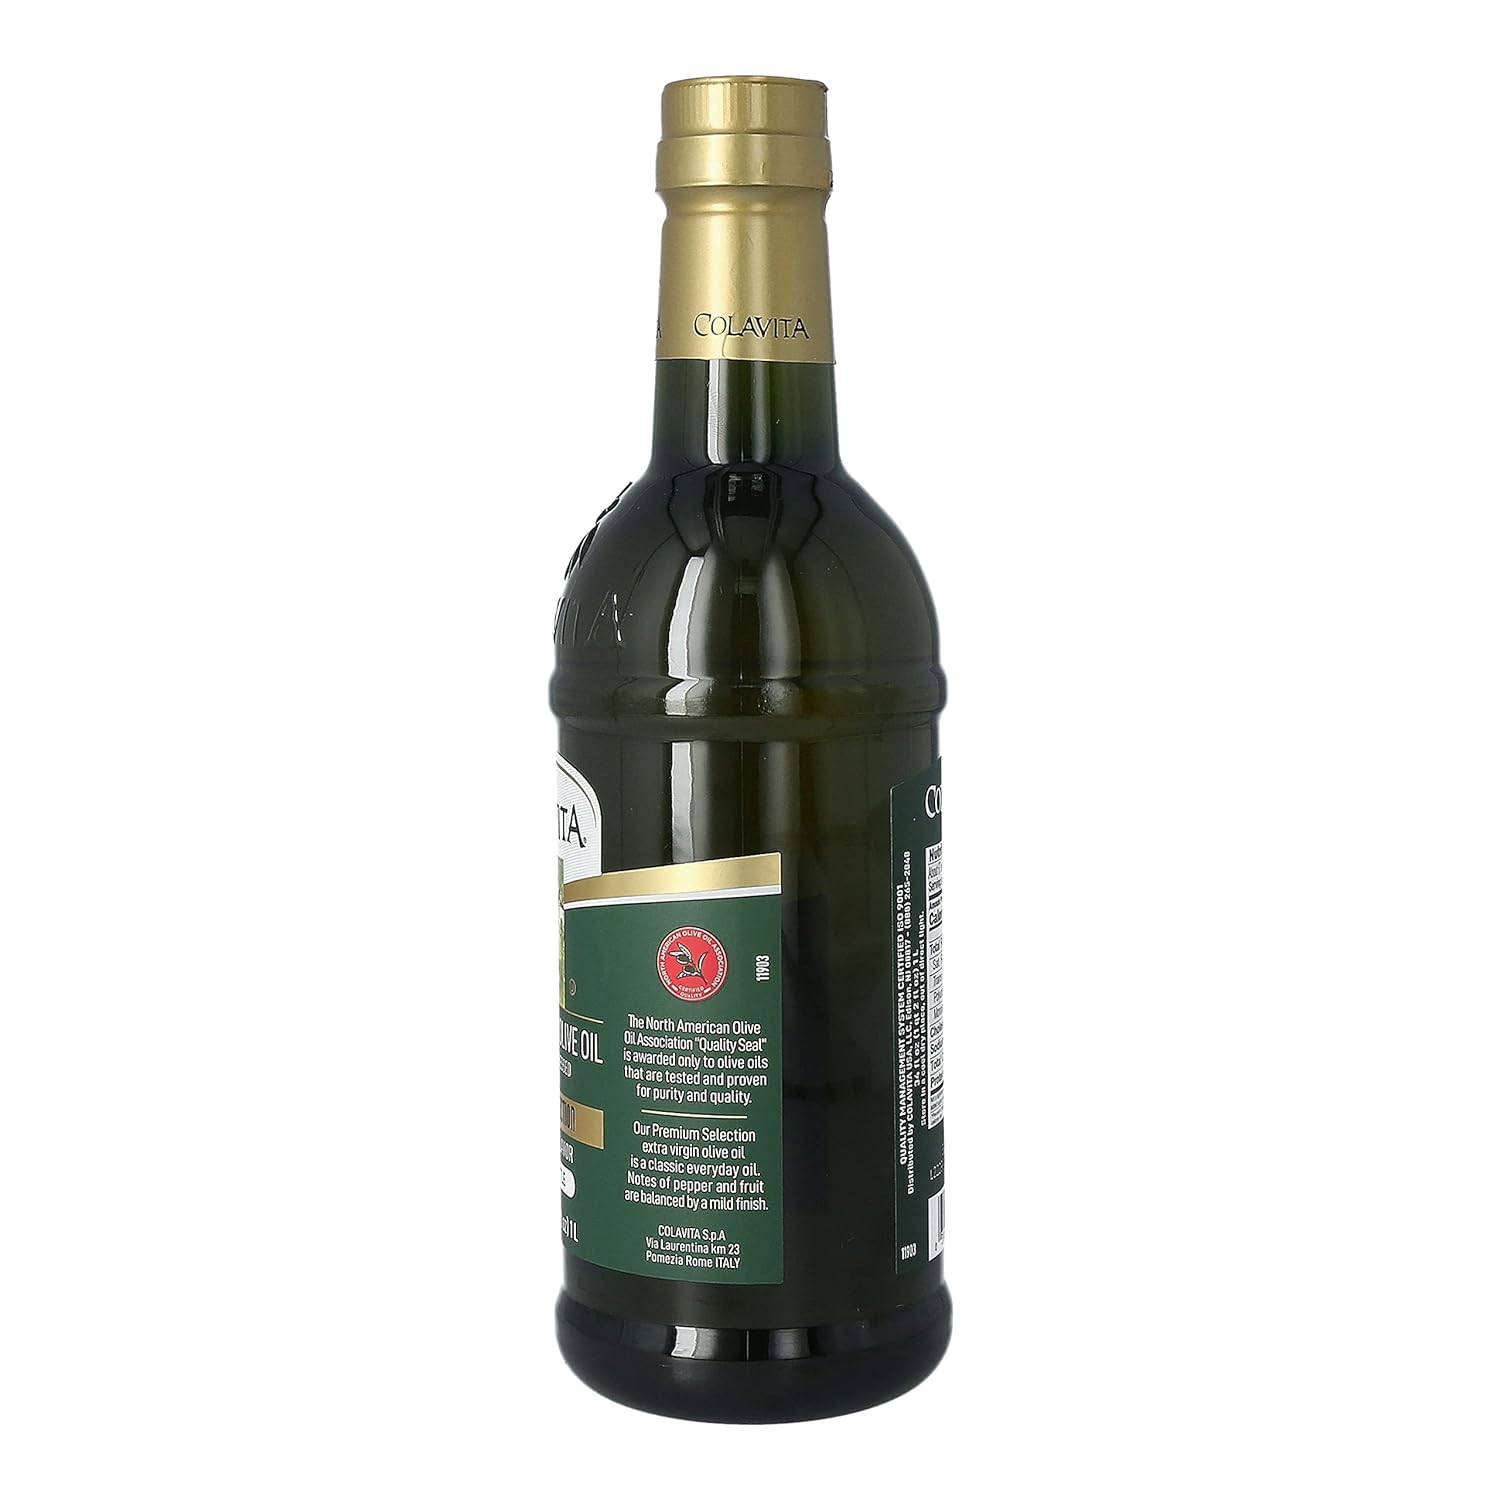 Colavita Premium Selection Extra Virgin Olive Oil 34 Oz Bottle : Grocery & Gourmet Food